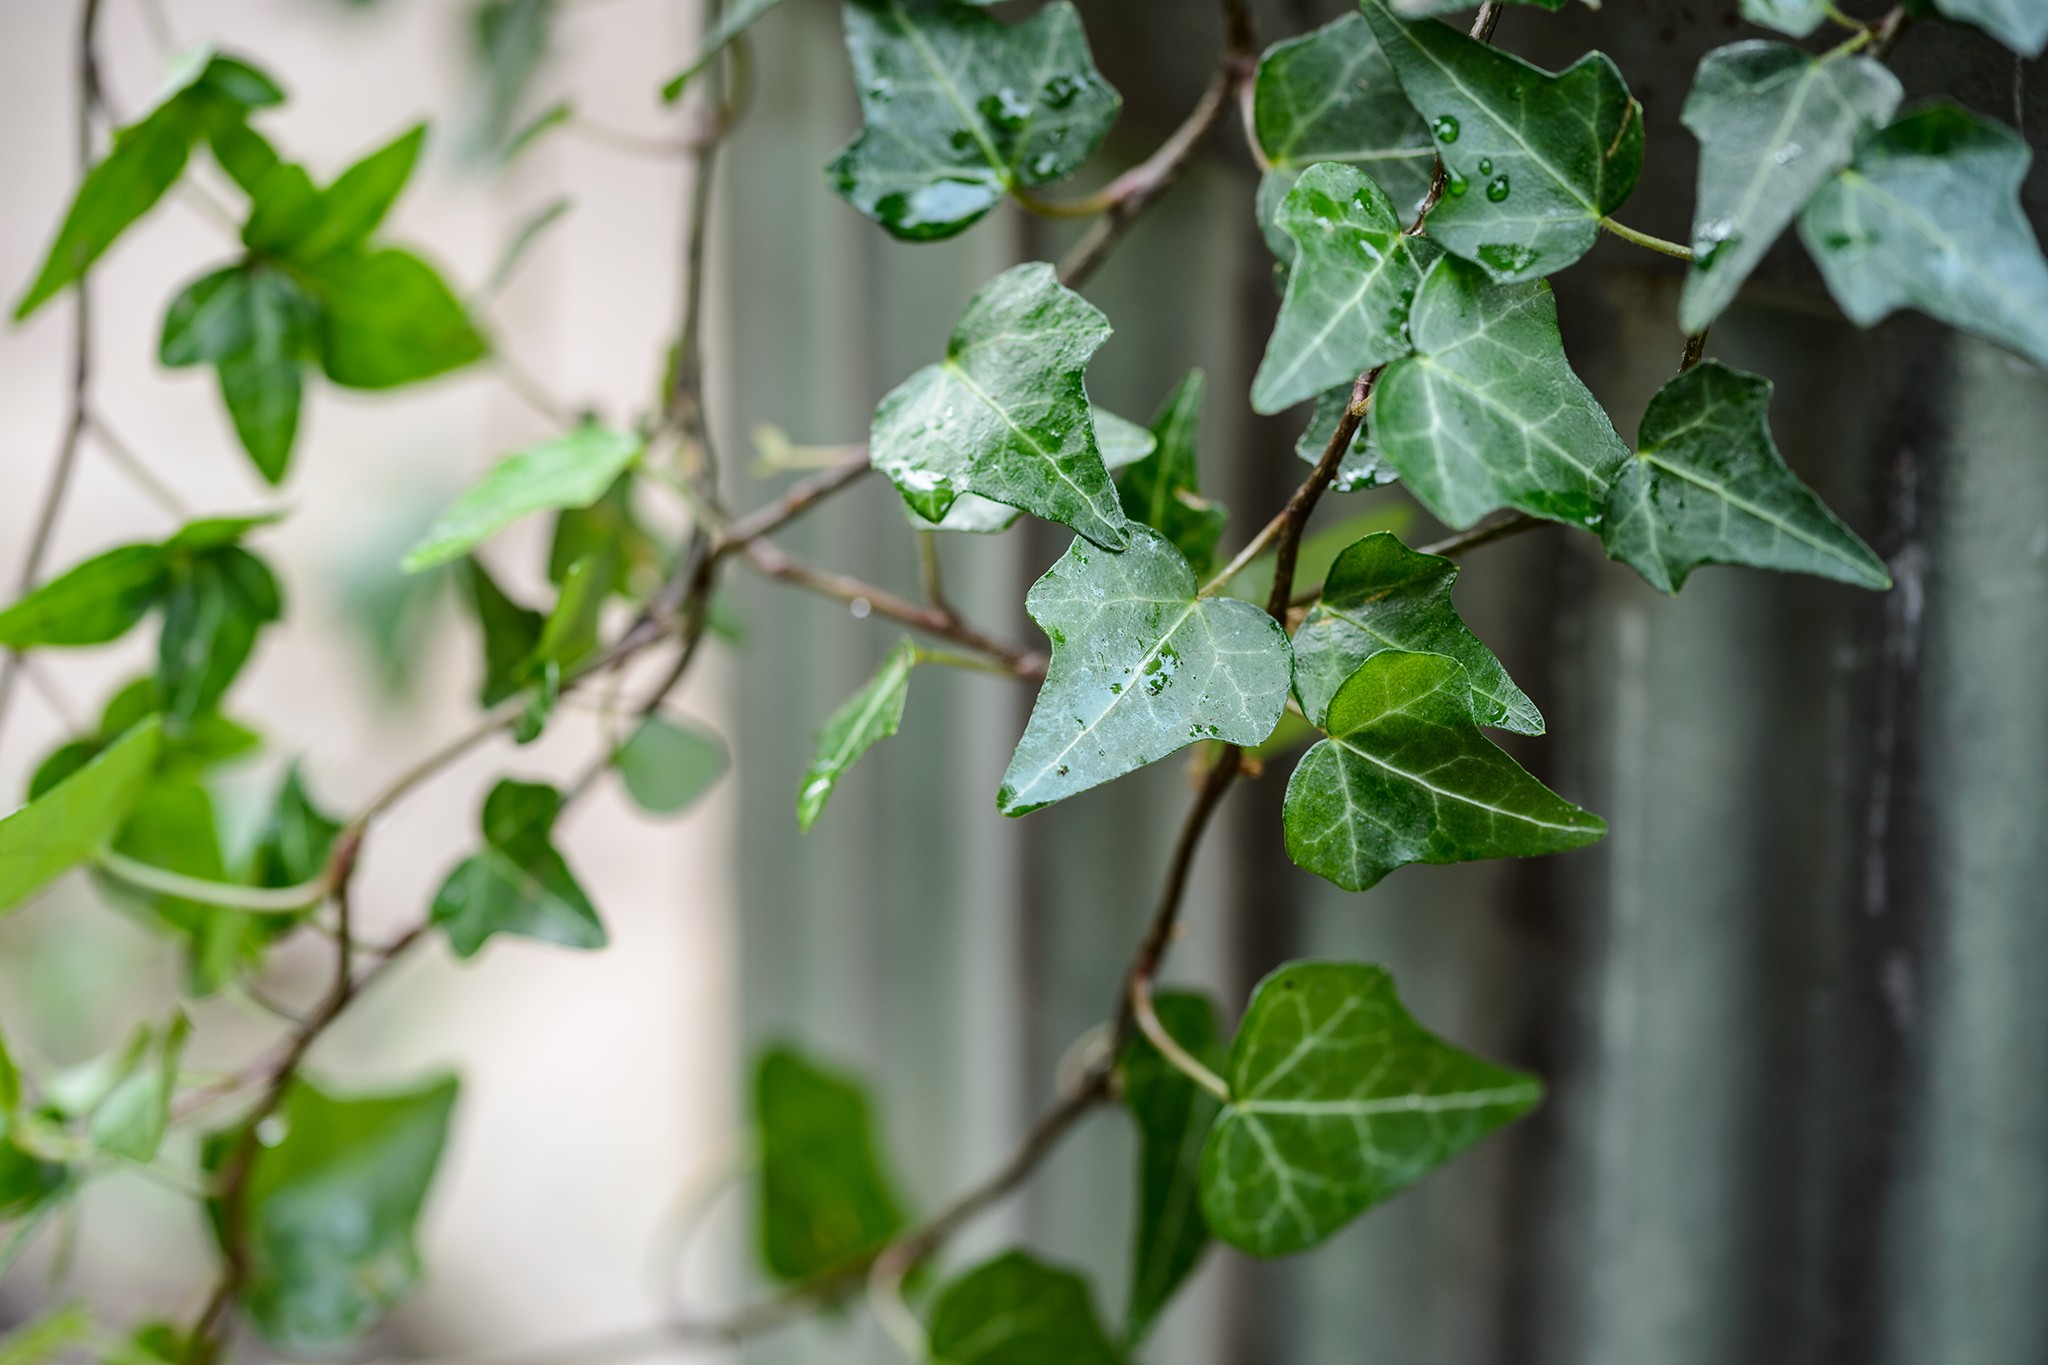 English ivy growing indoors